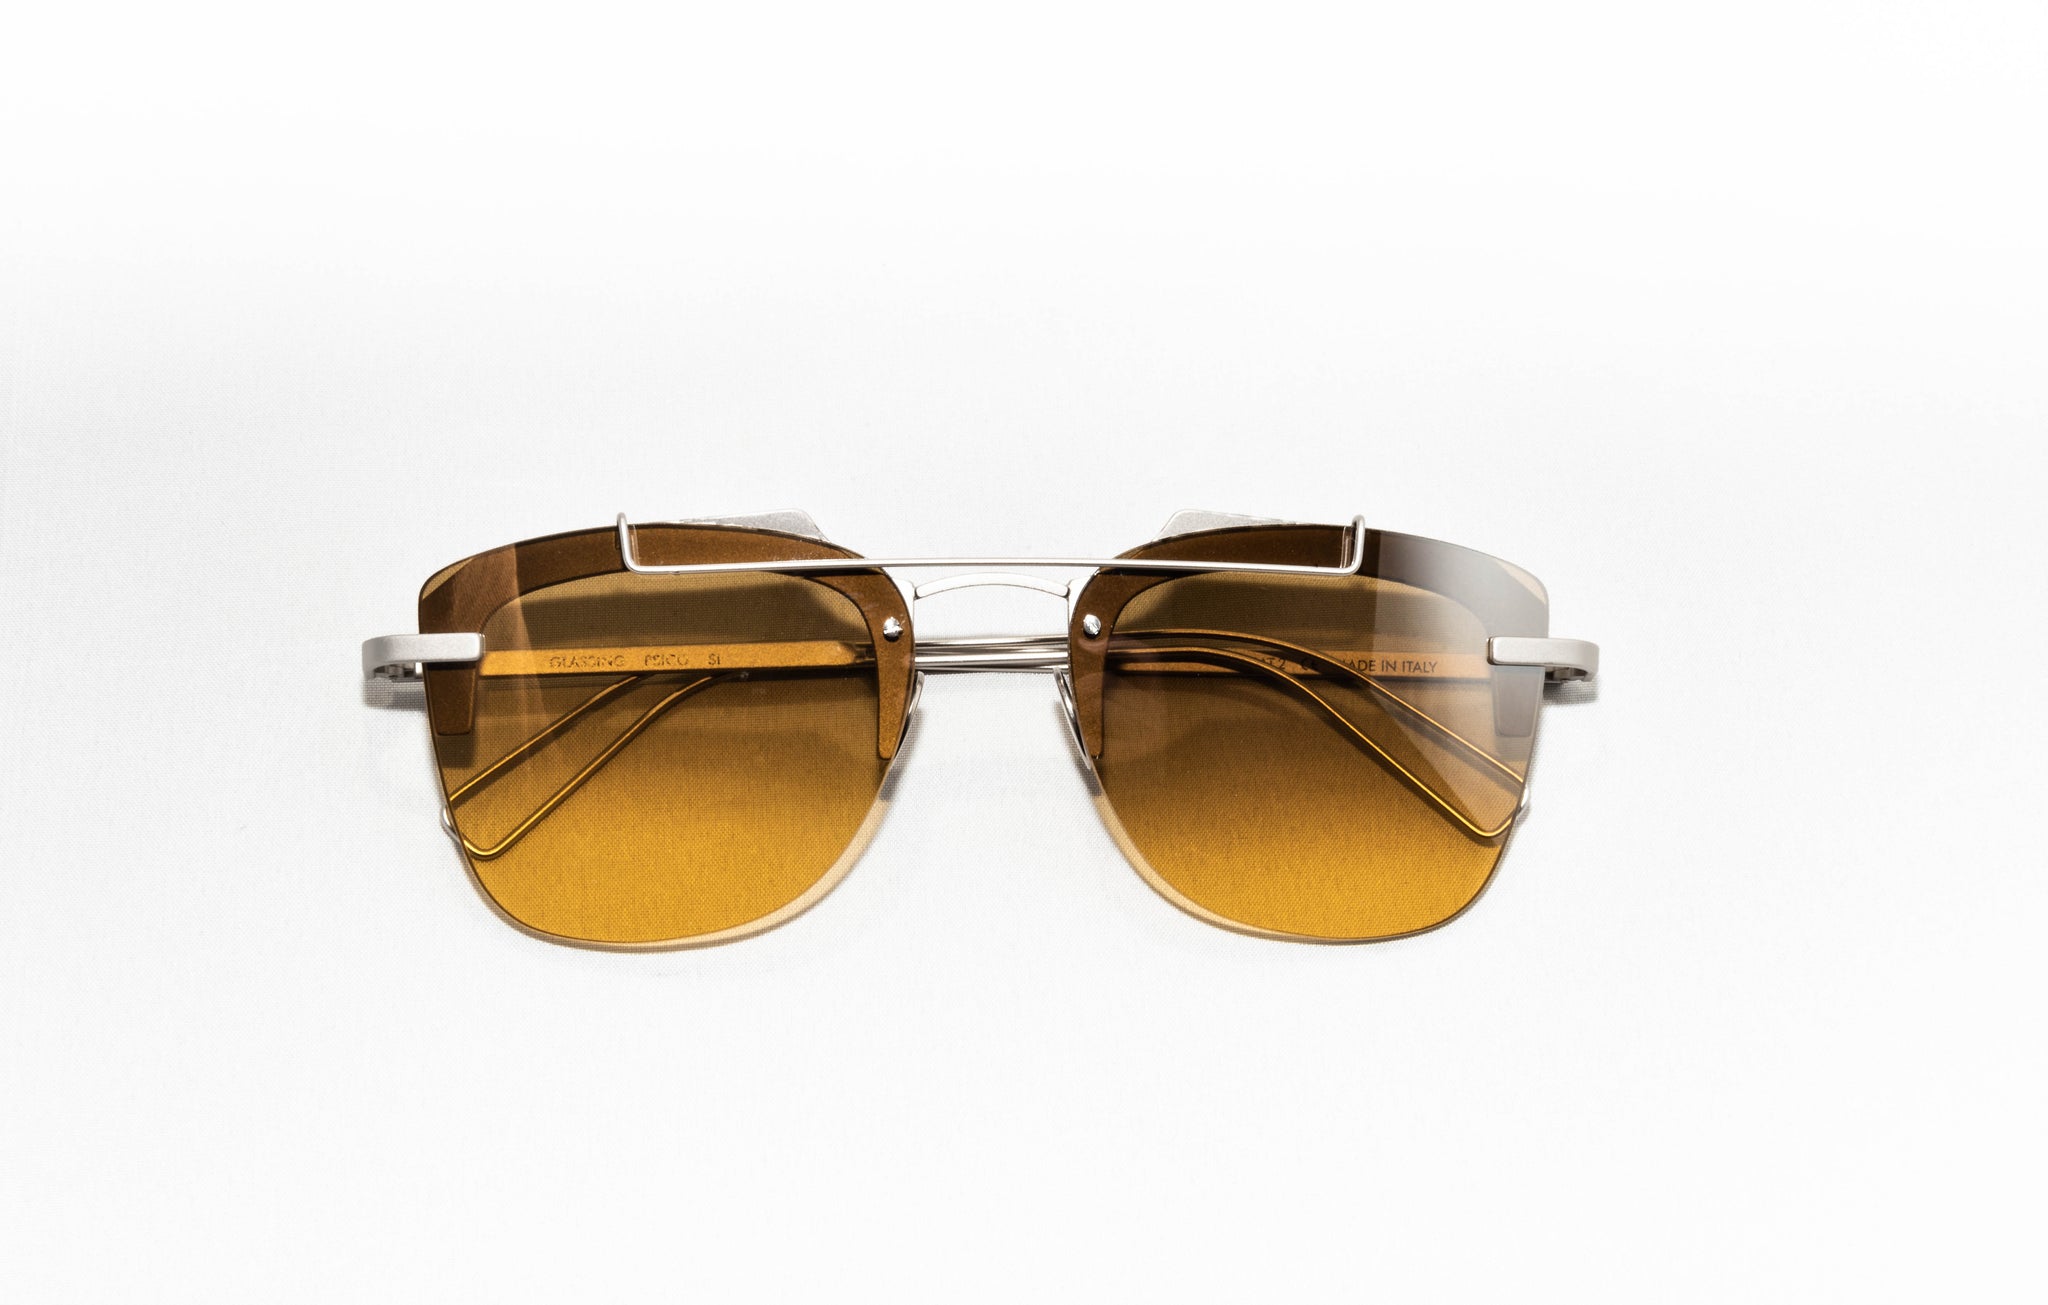 Psico steel sunglasses